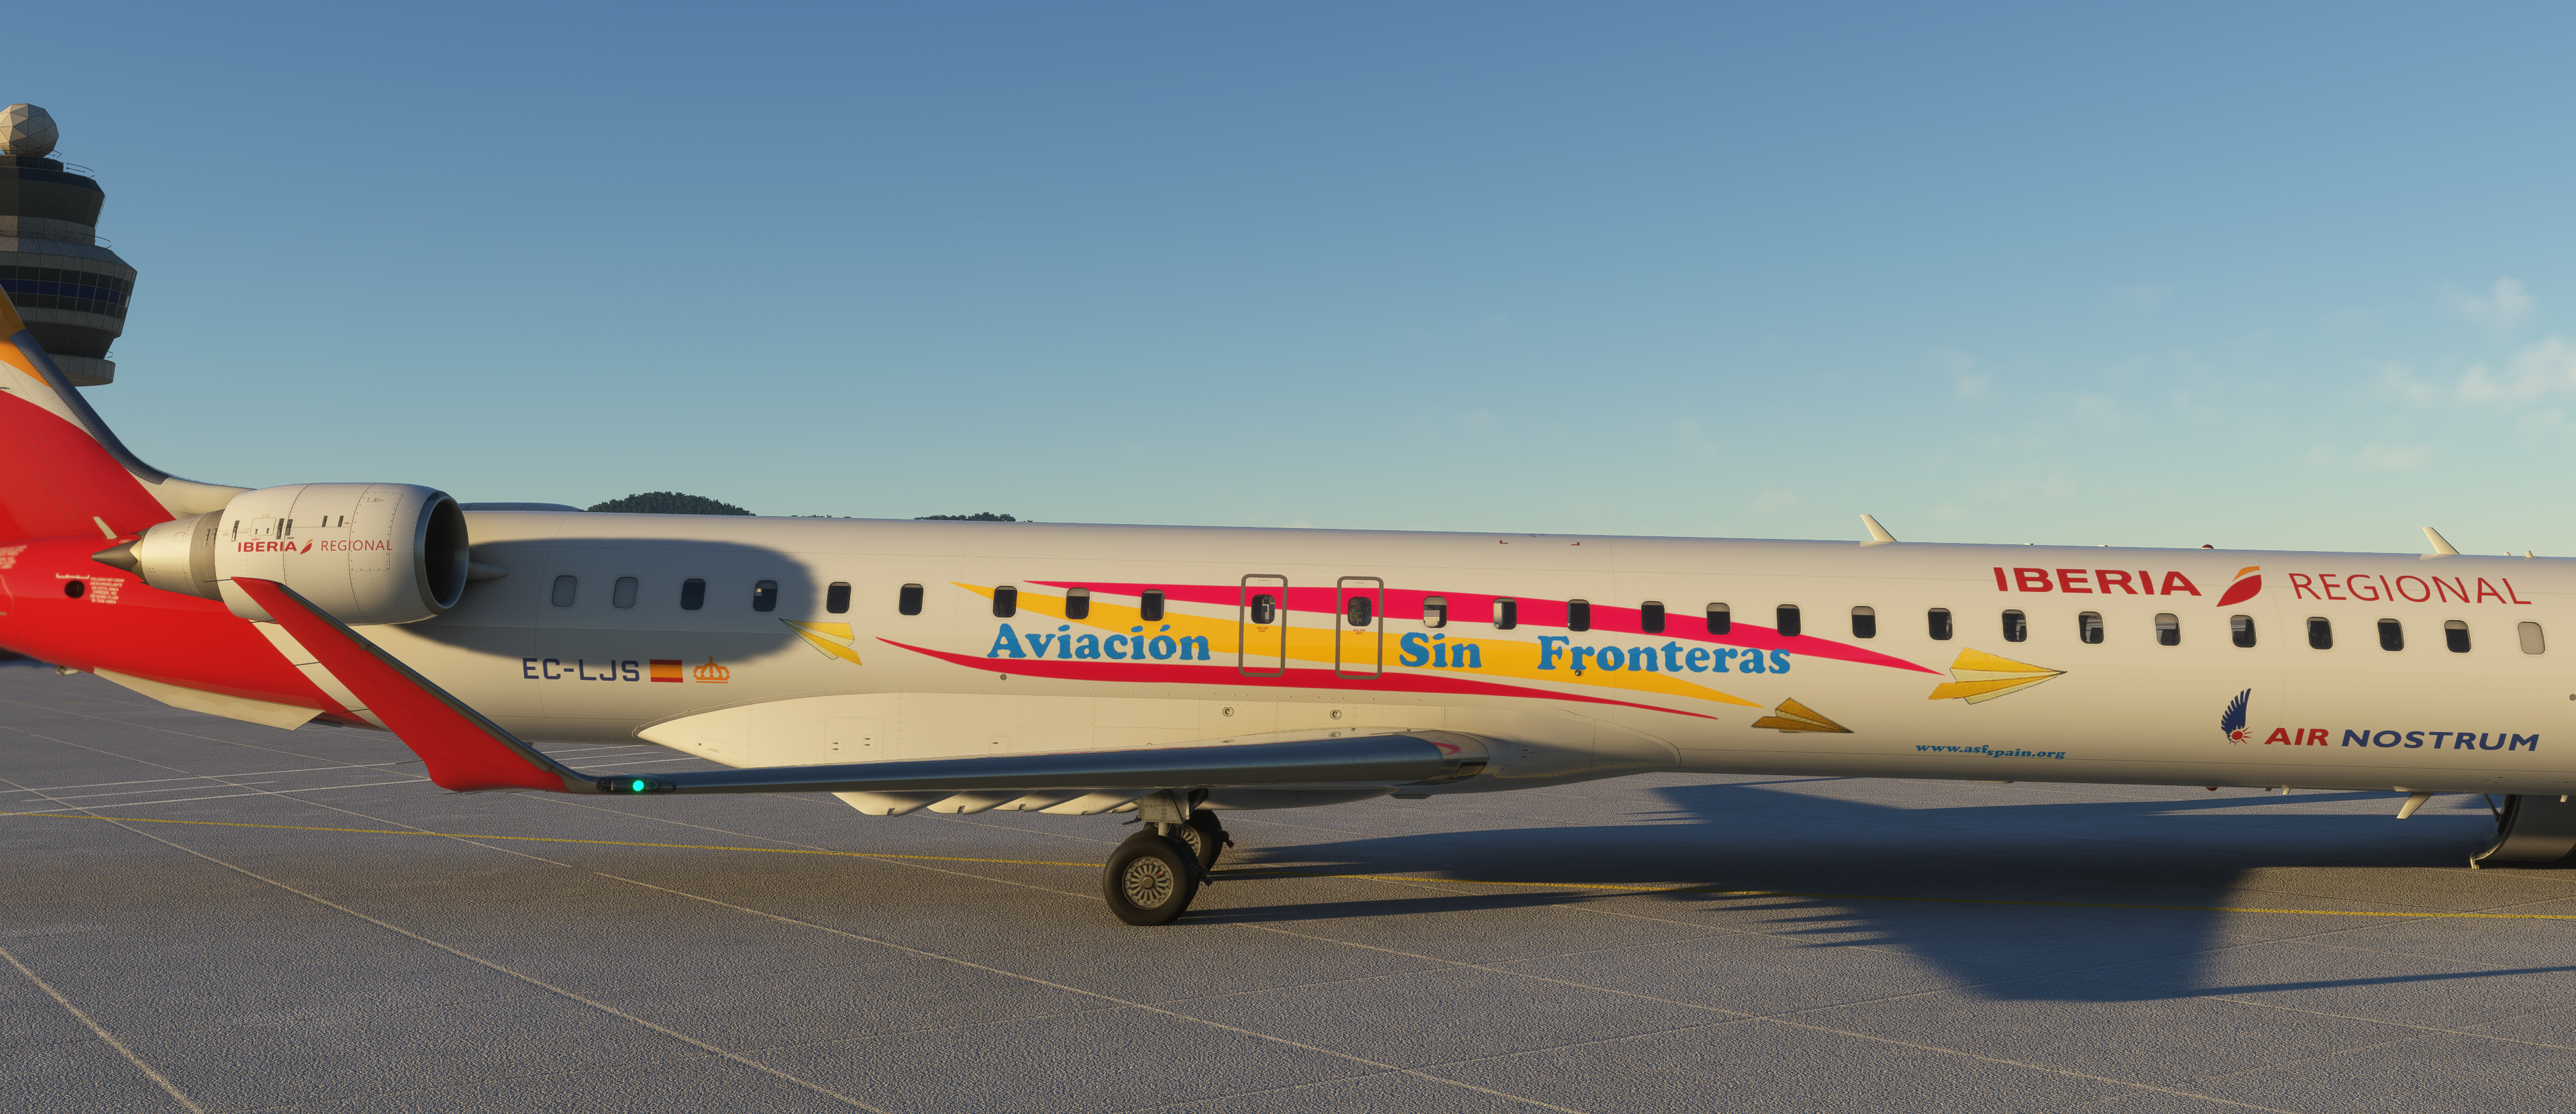 CRJ1000 AIR NOSTRUM - EC-LJS - AVIACION SIN FRONTERAS -  HIGH QUALITY- MSFS